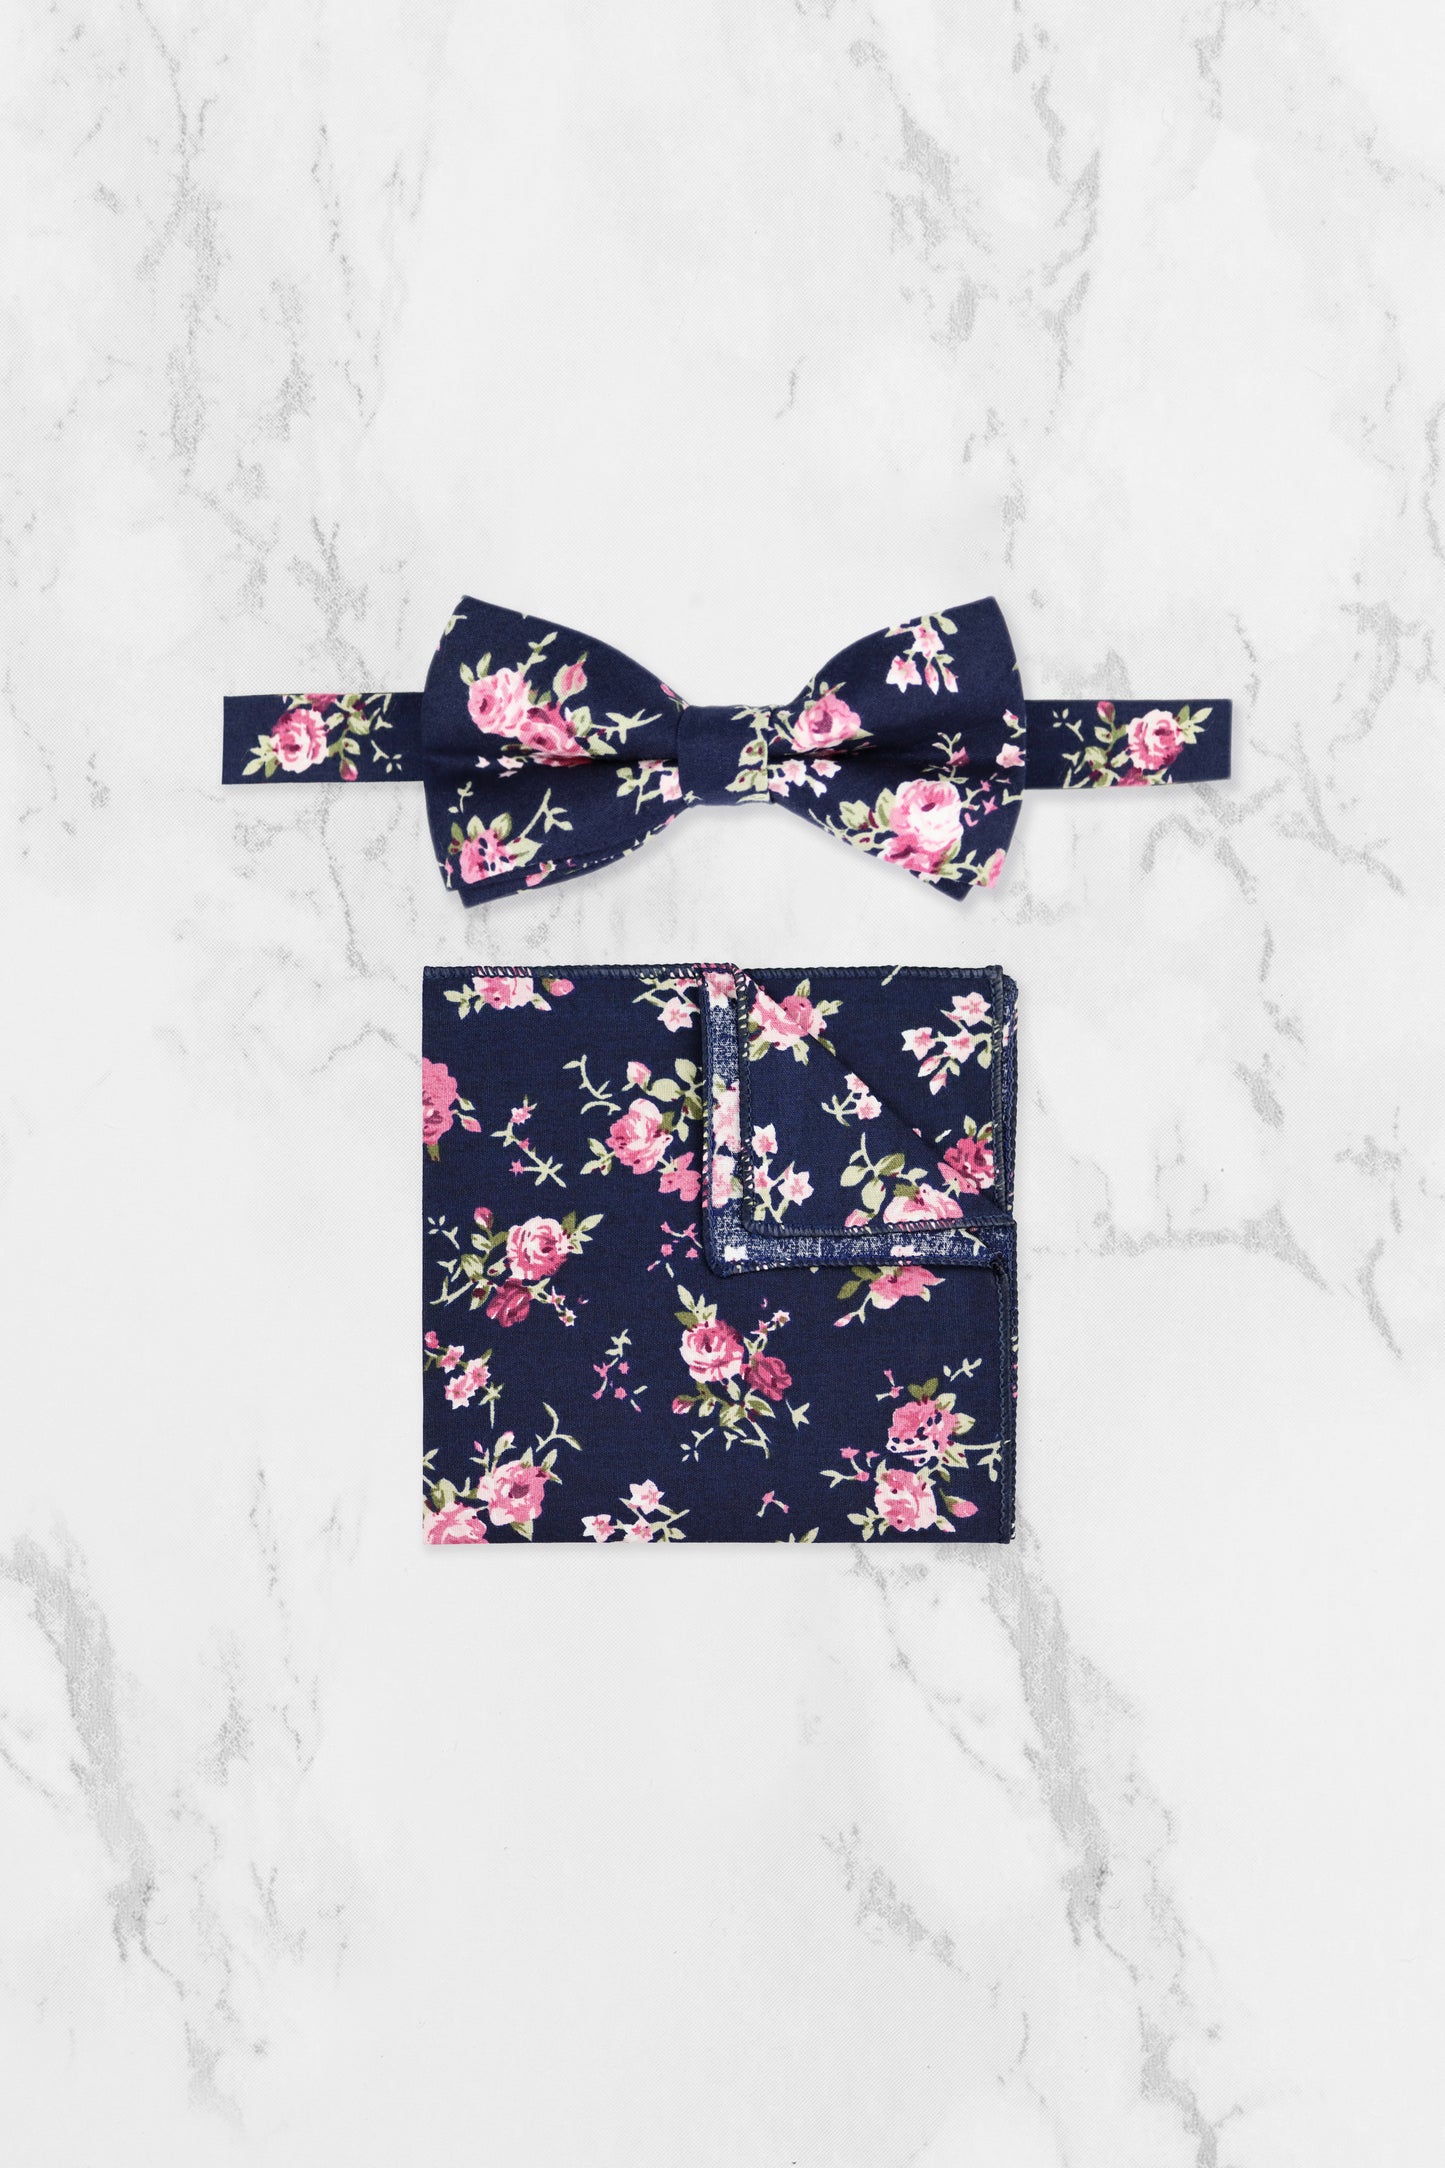 100% Cotton Floral Print Tie - Navy Blue & Pink